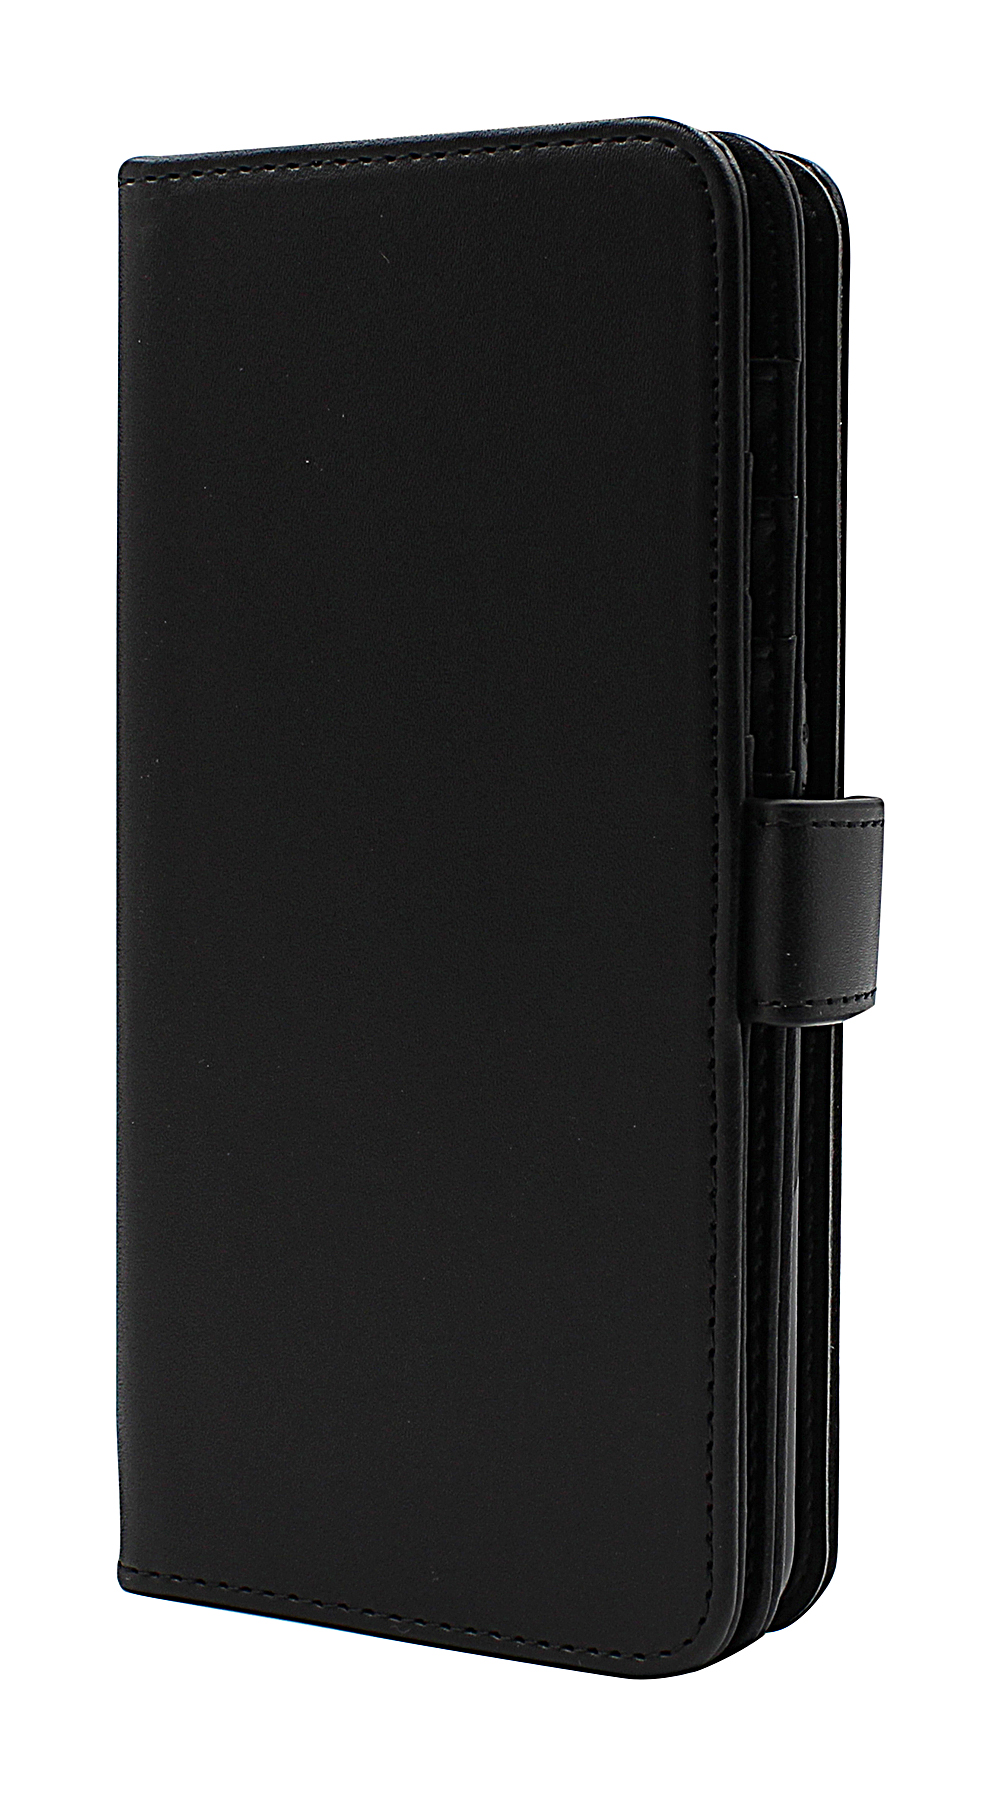 CoverInSkimblocker XL Wallet Samsung Galaxy S21 Plus 5G (G996B)